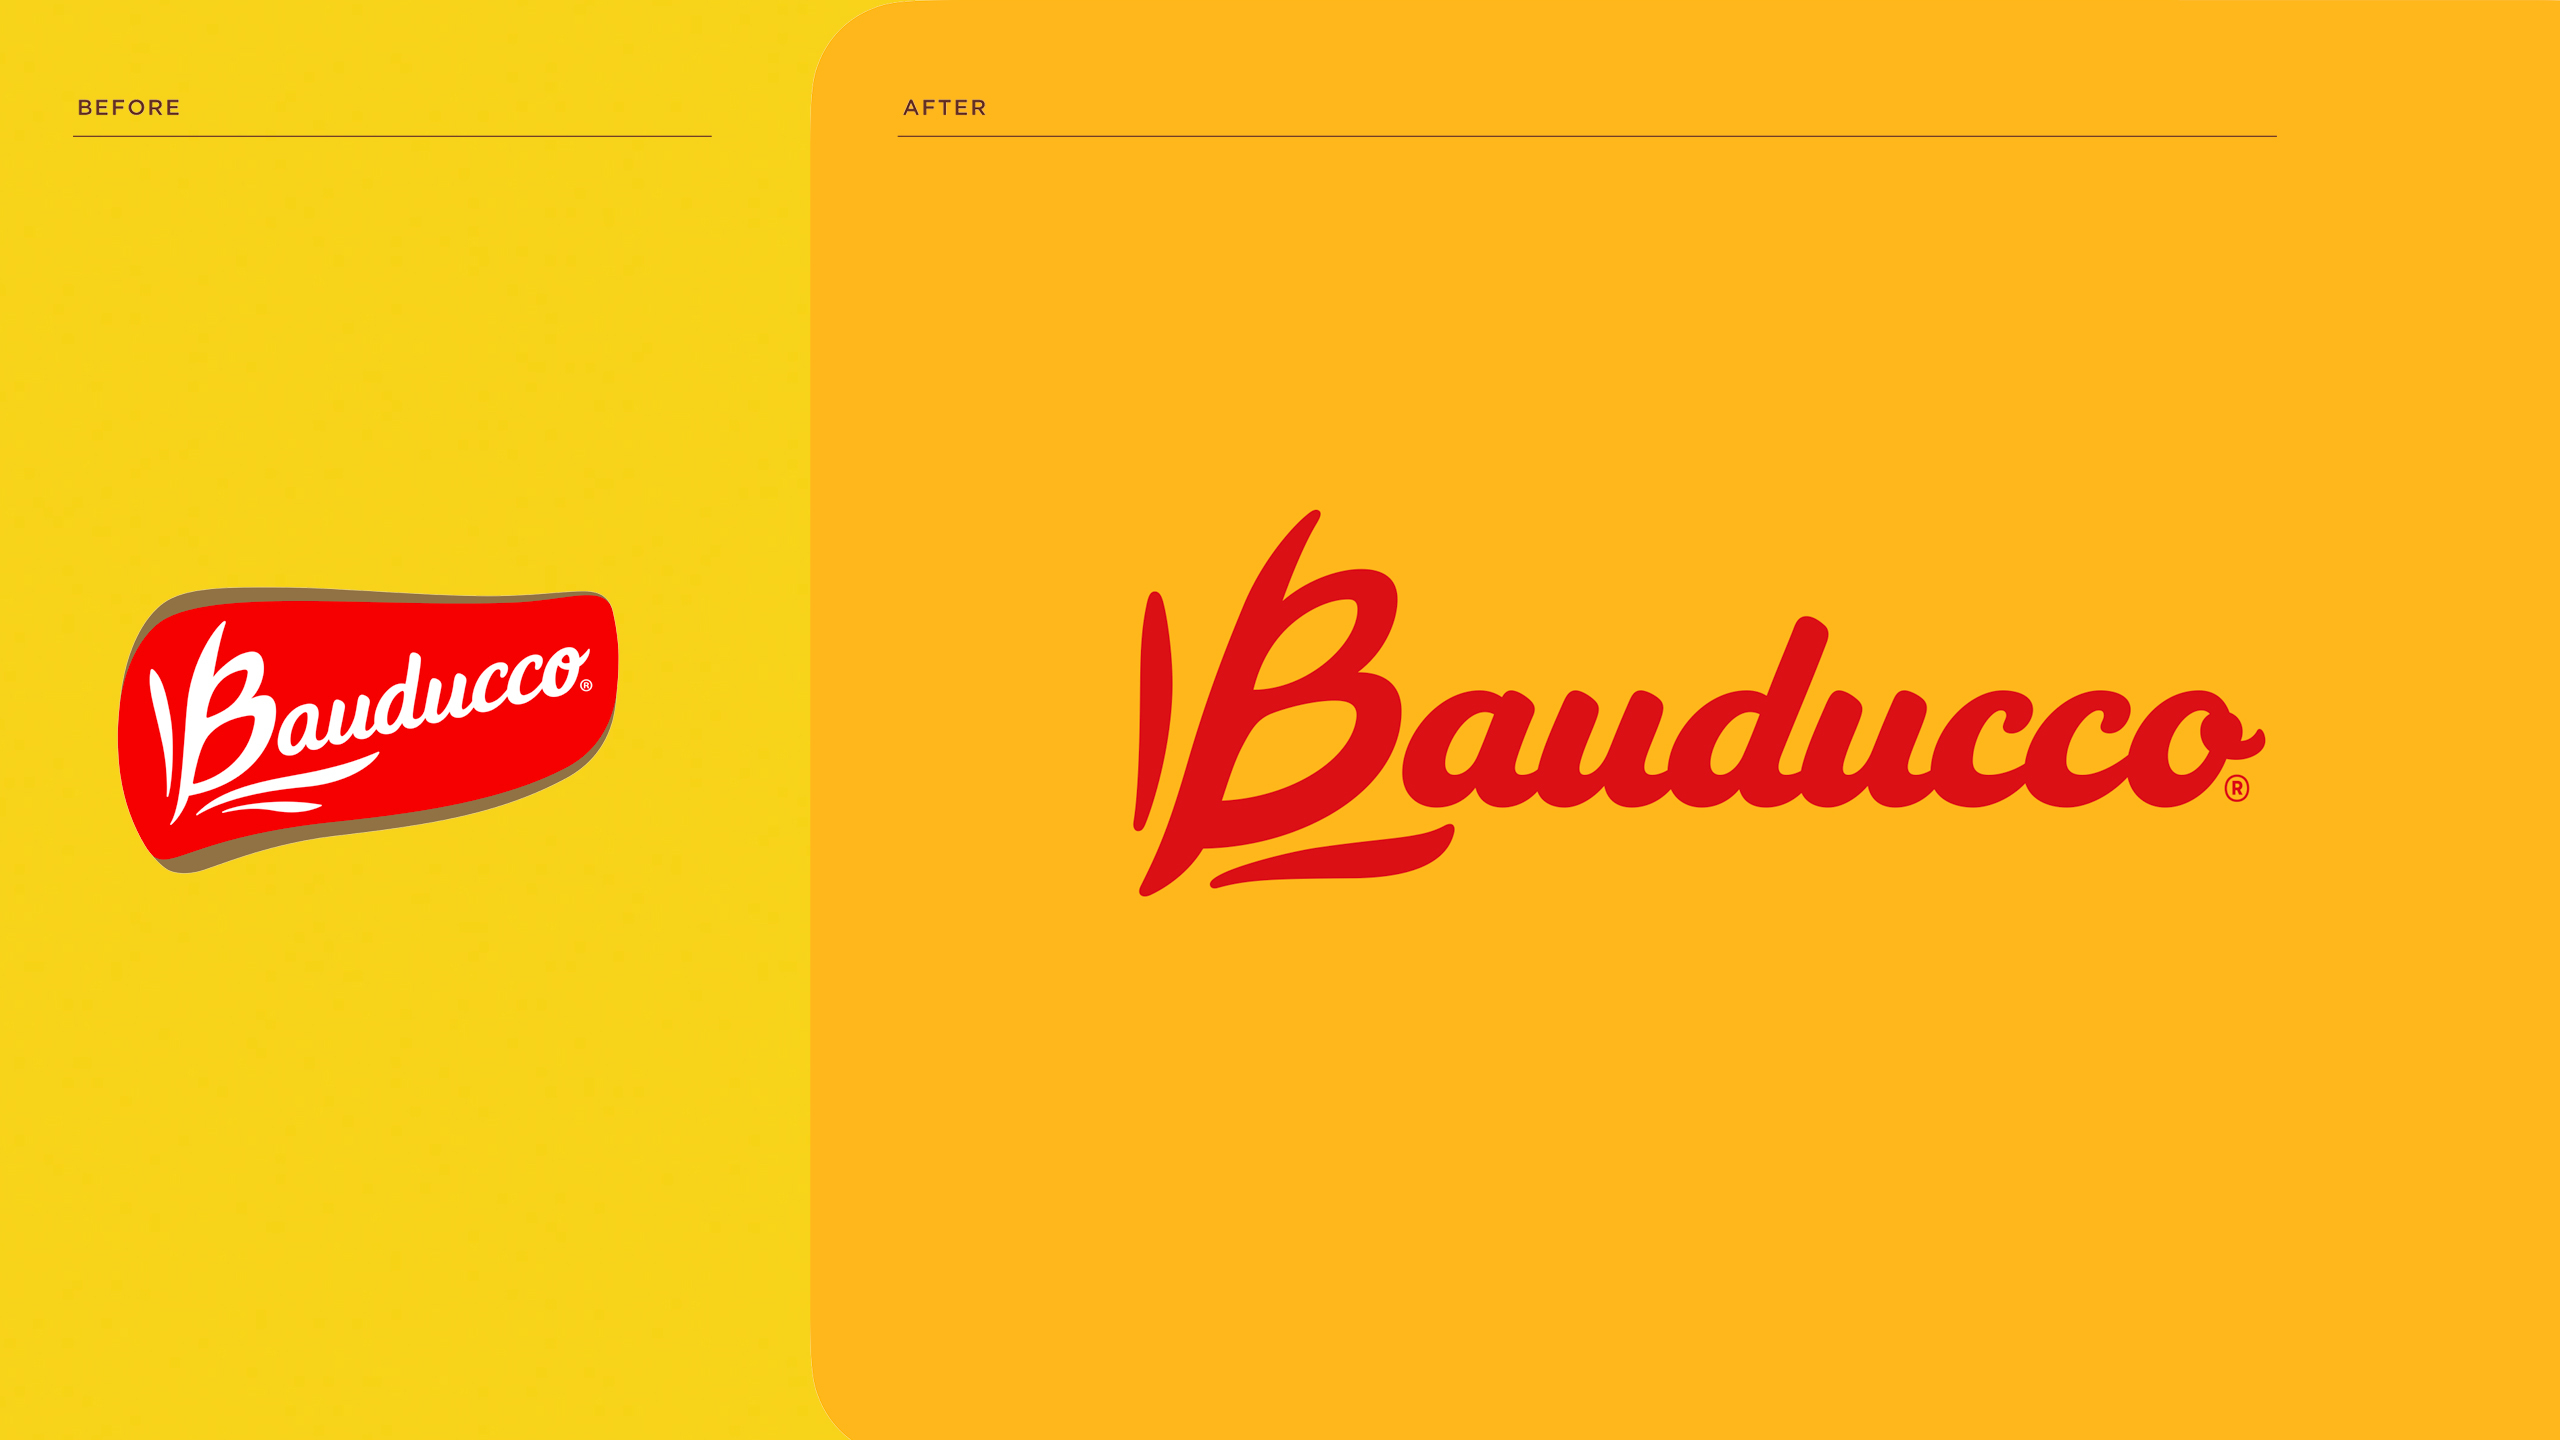 Bauducco One Brand